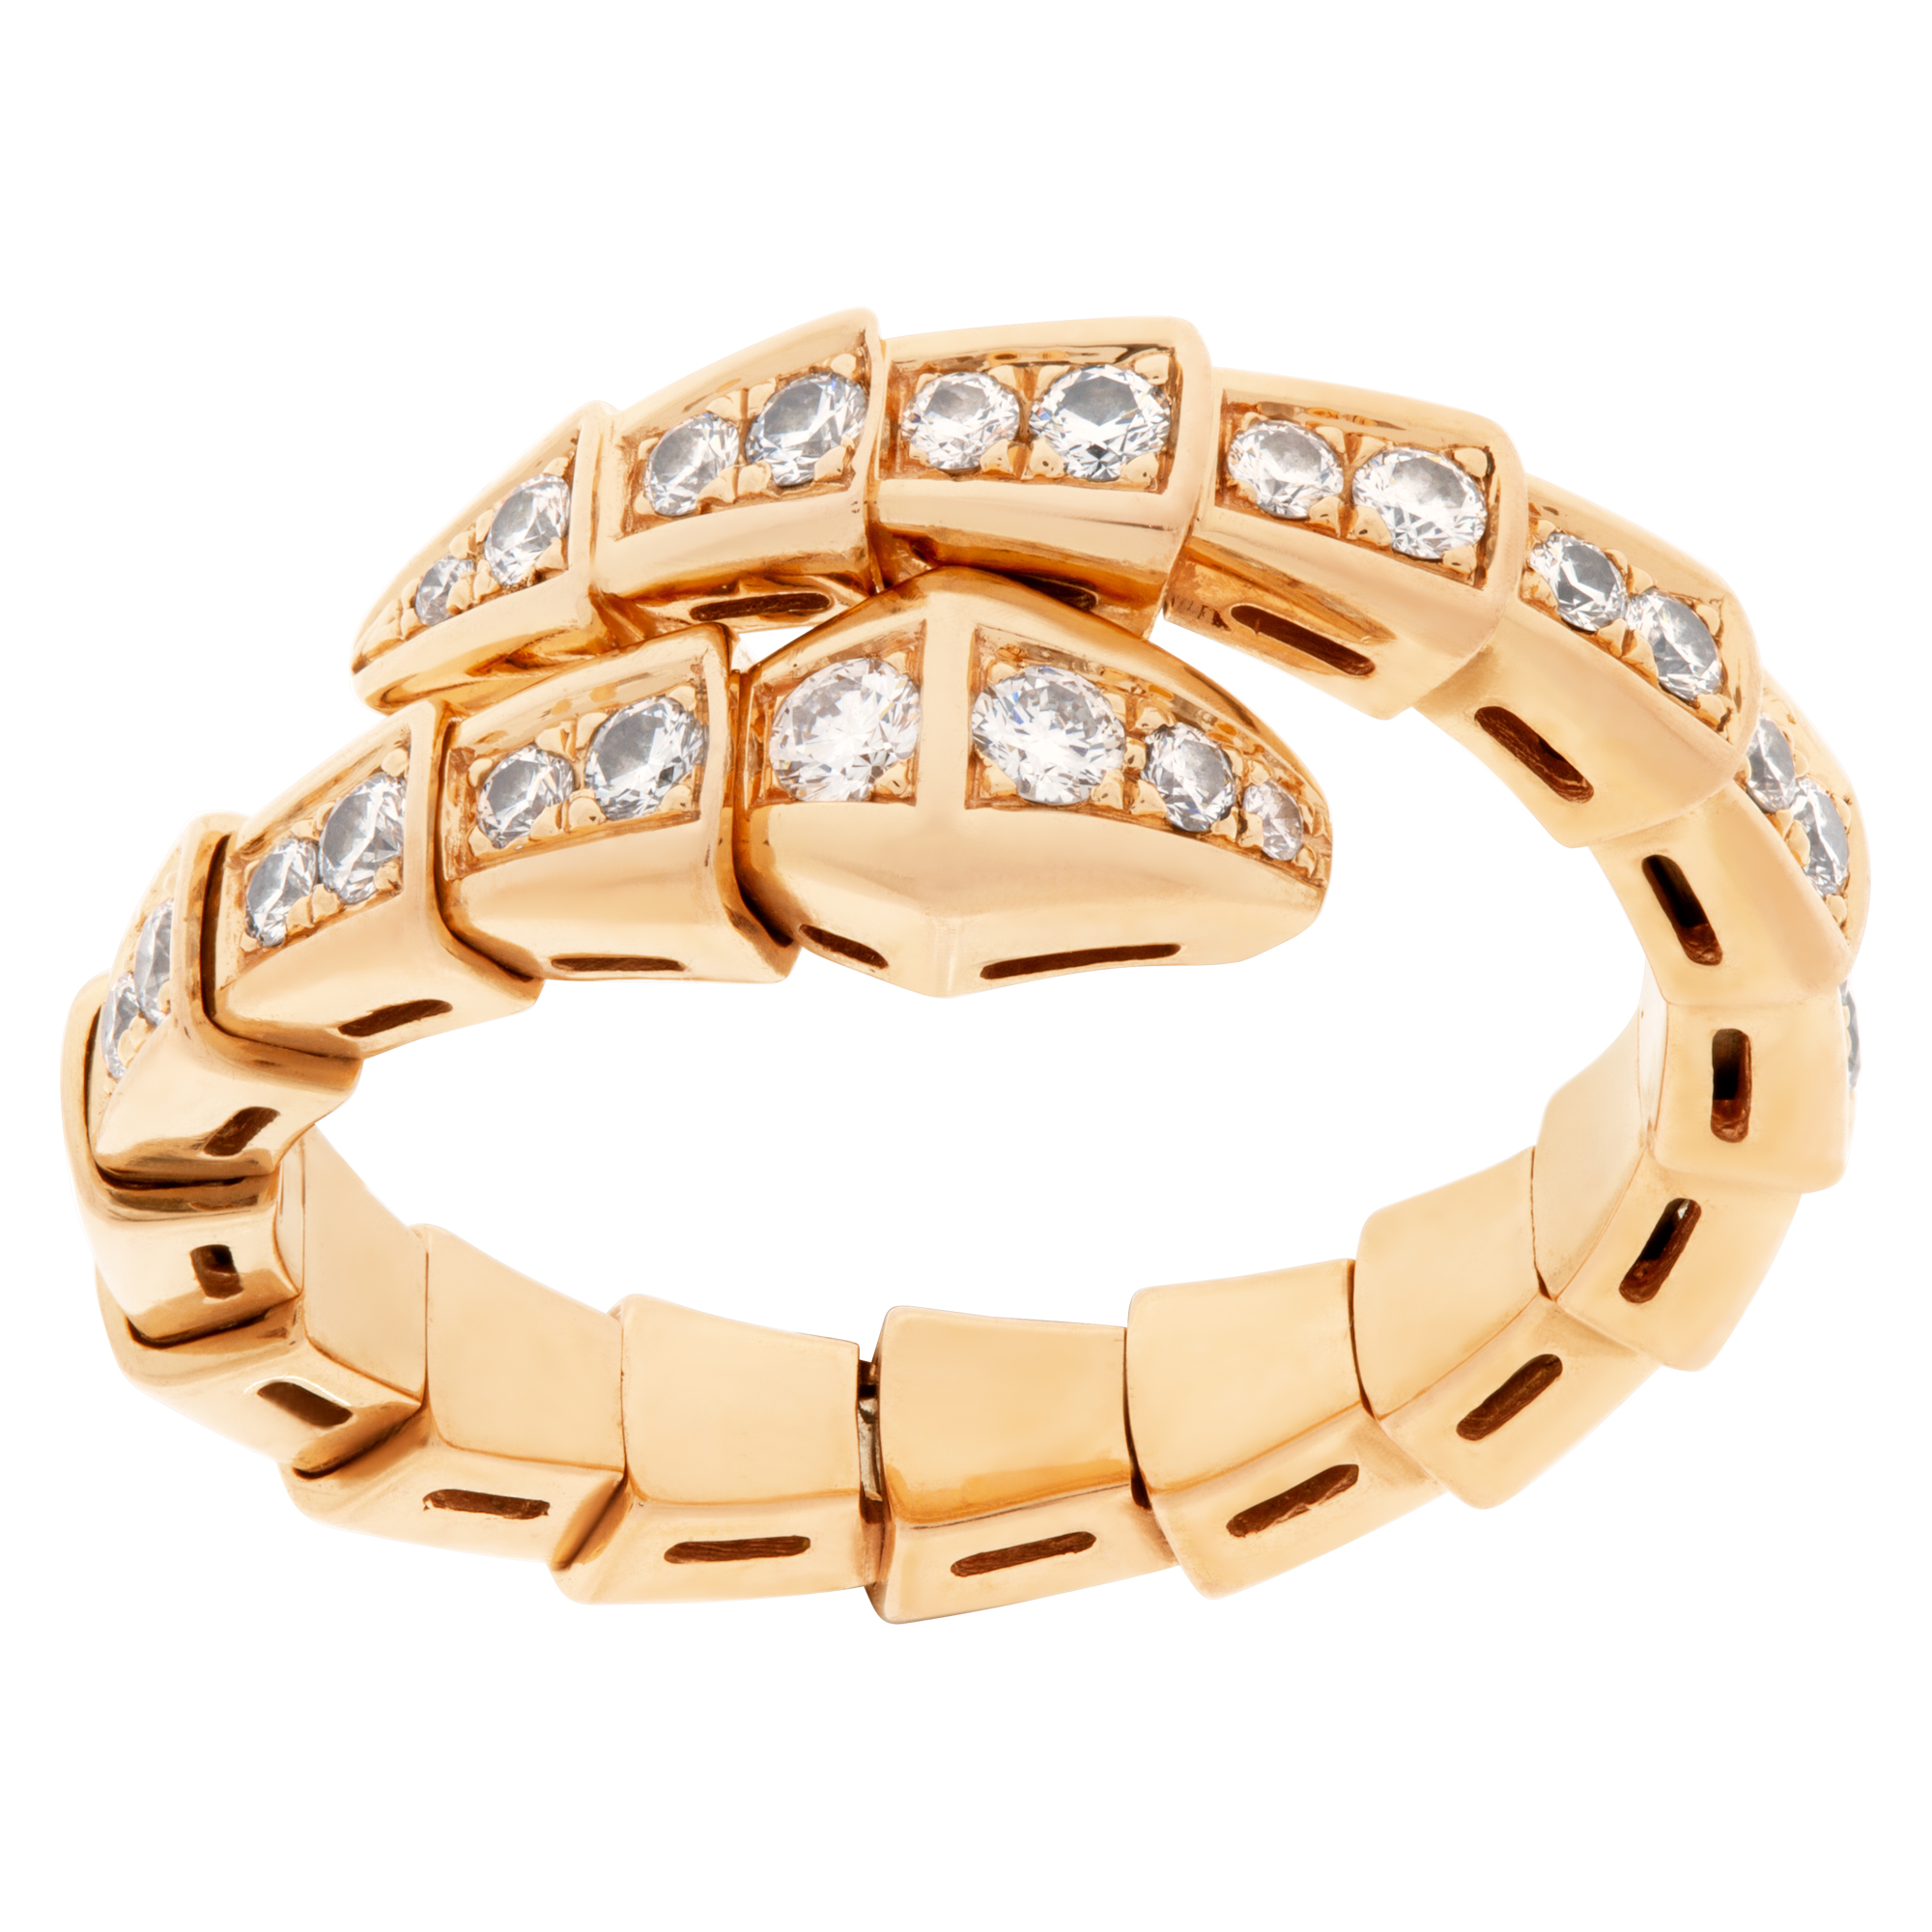 Bvlgari Serpenti Viper Ring in 18k rose gold and diamonds image 1